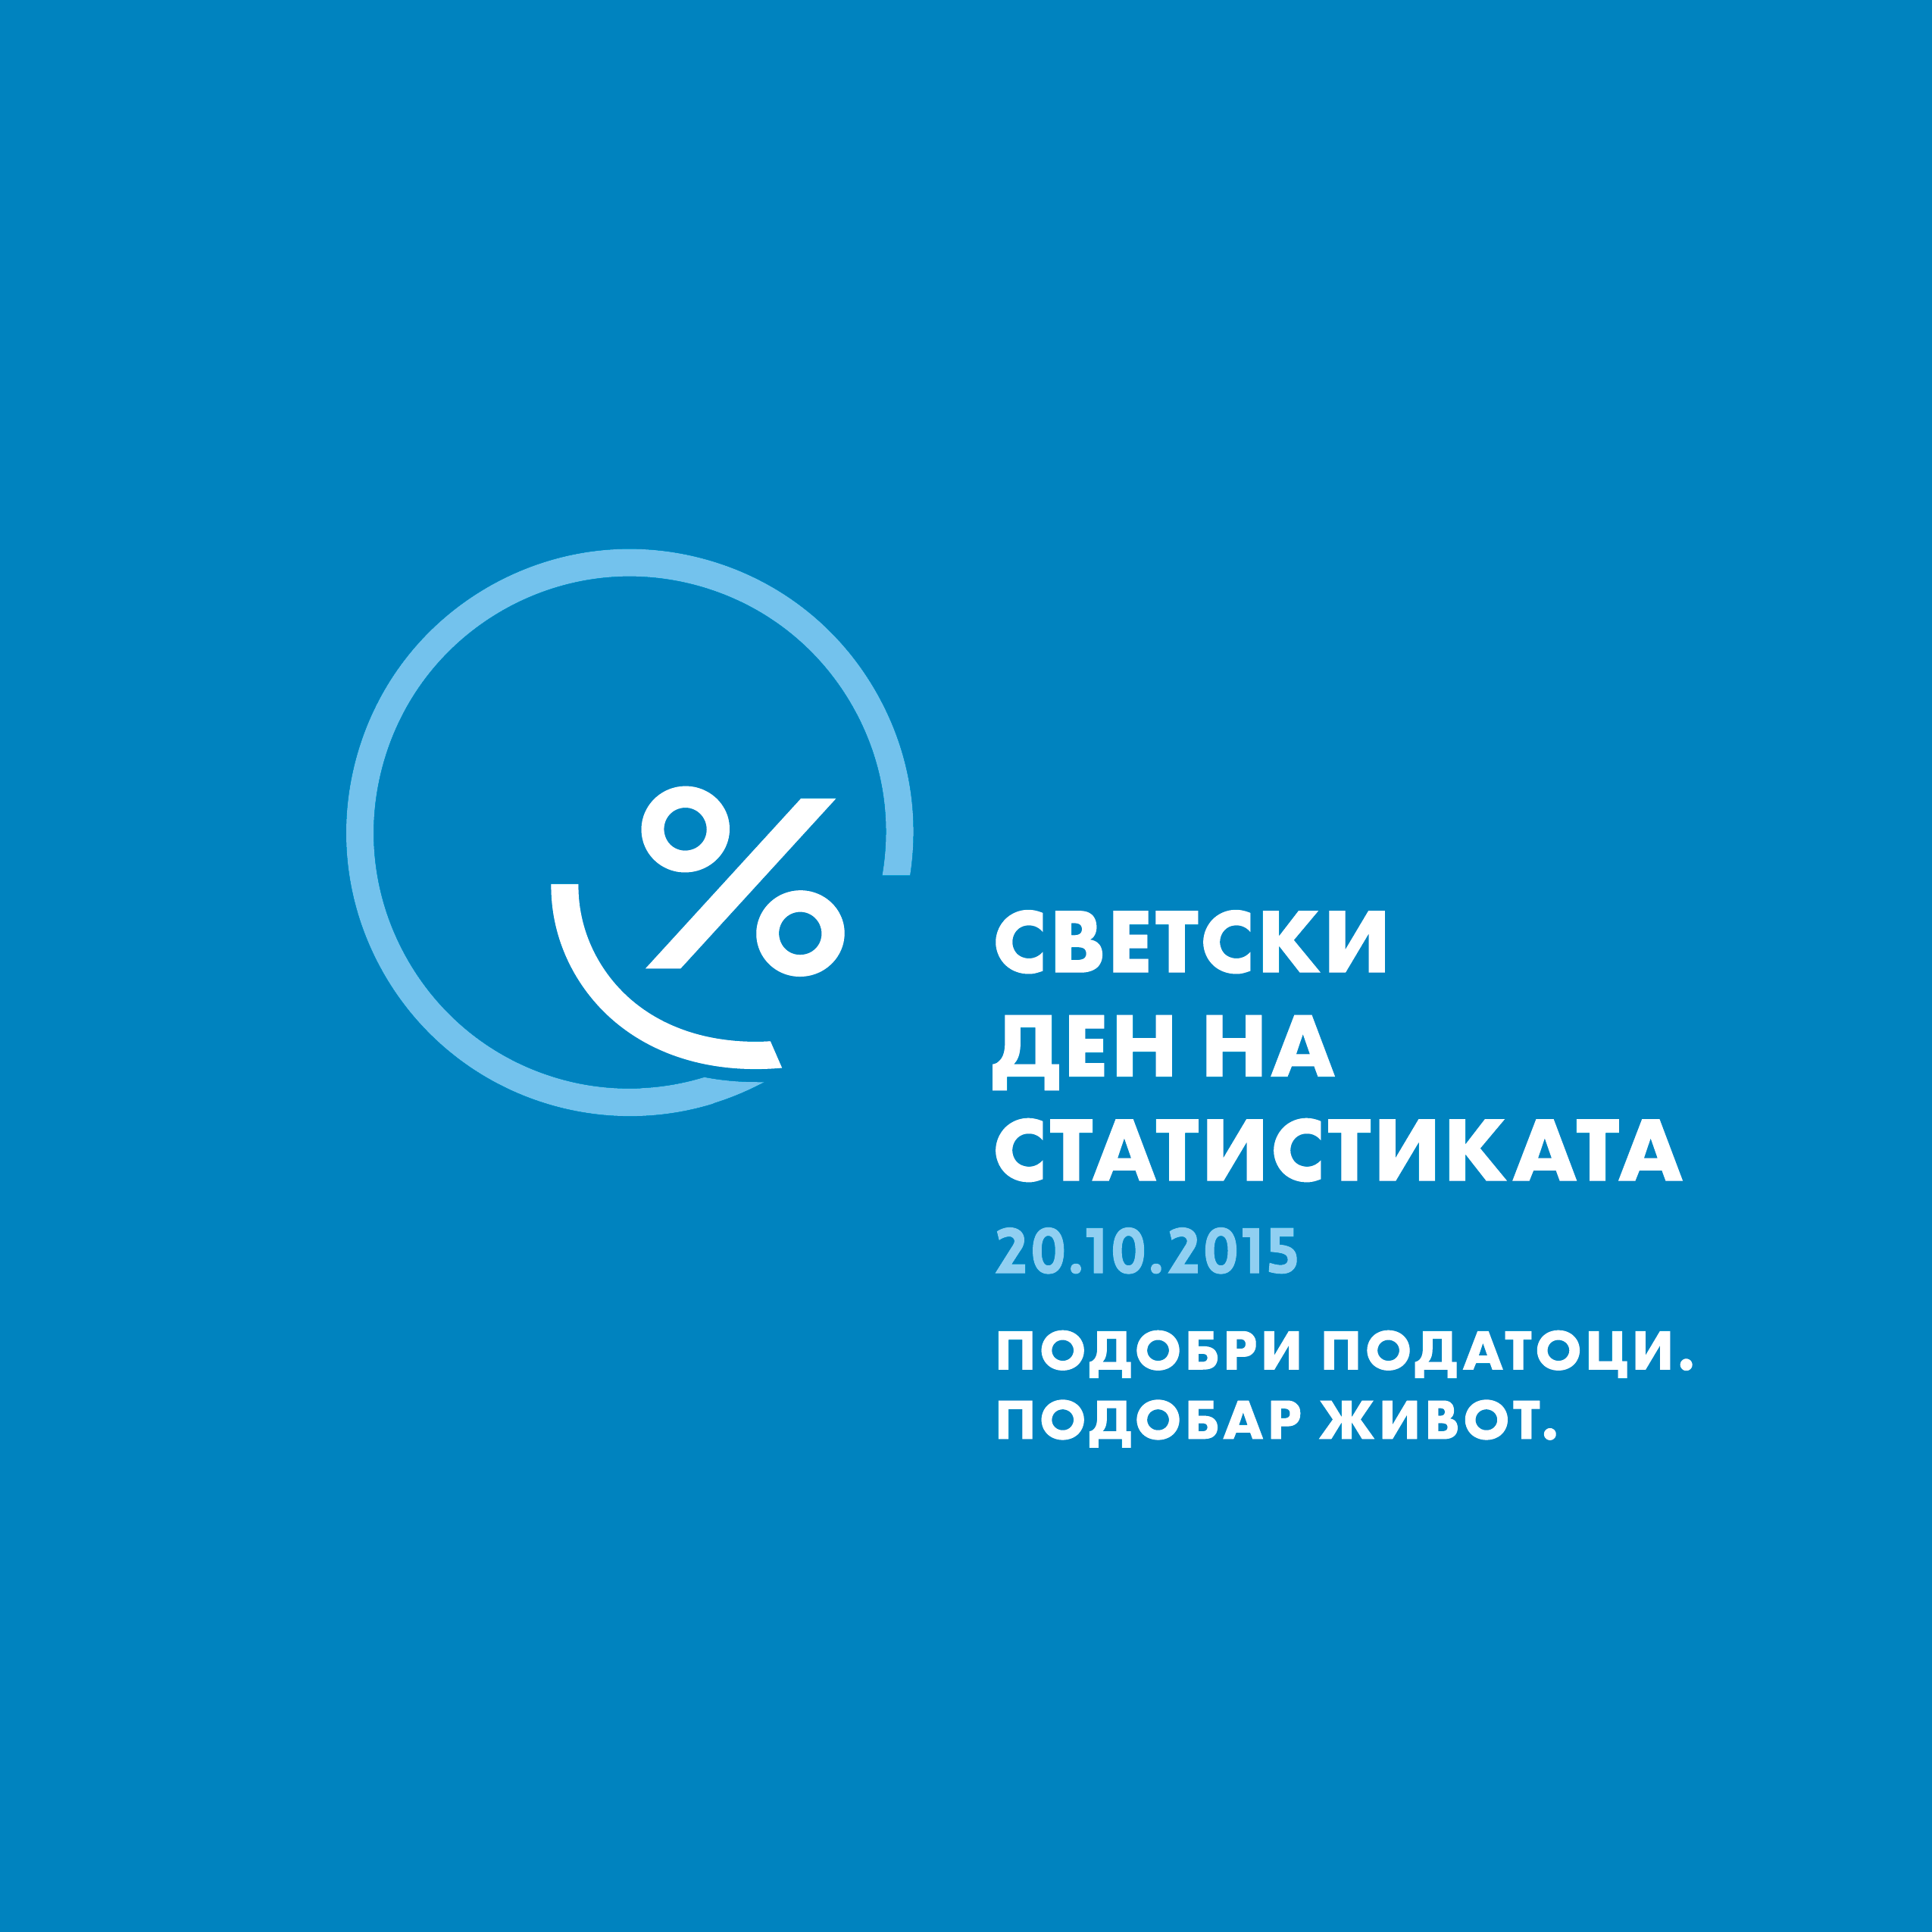 World Statistics Day Logo in Macedonian